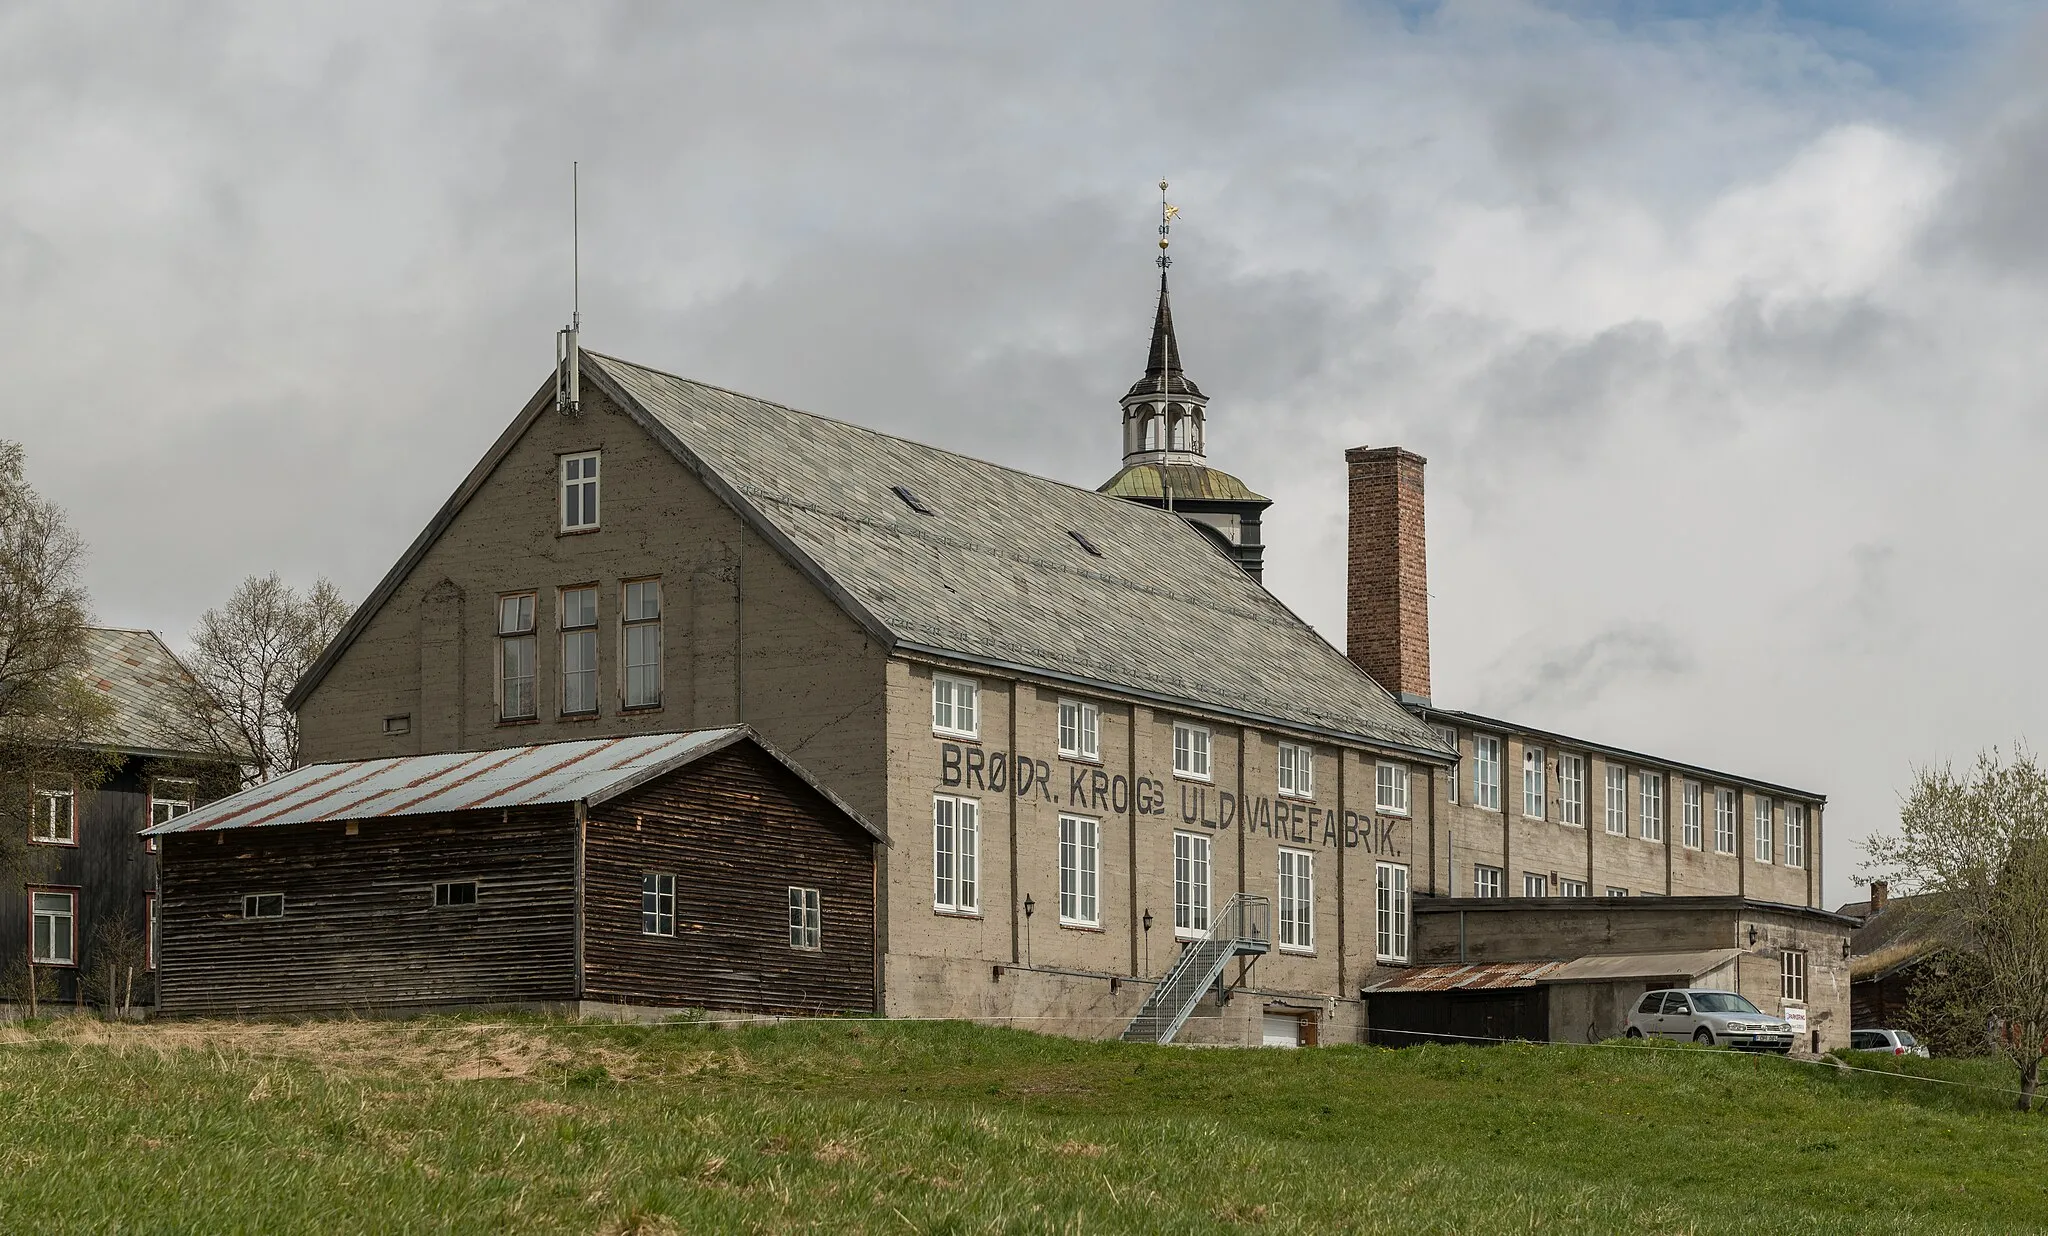 Photo showing: A south view of the Brødrene Krogs Uldvarefabrik in Røros